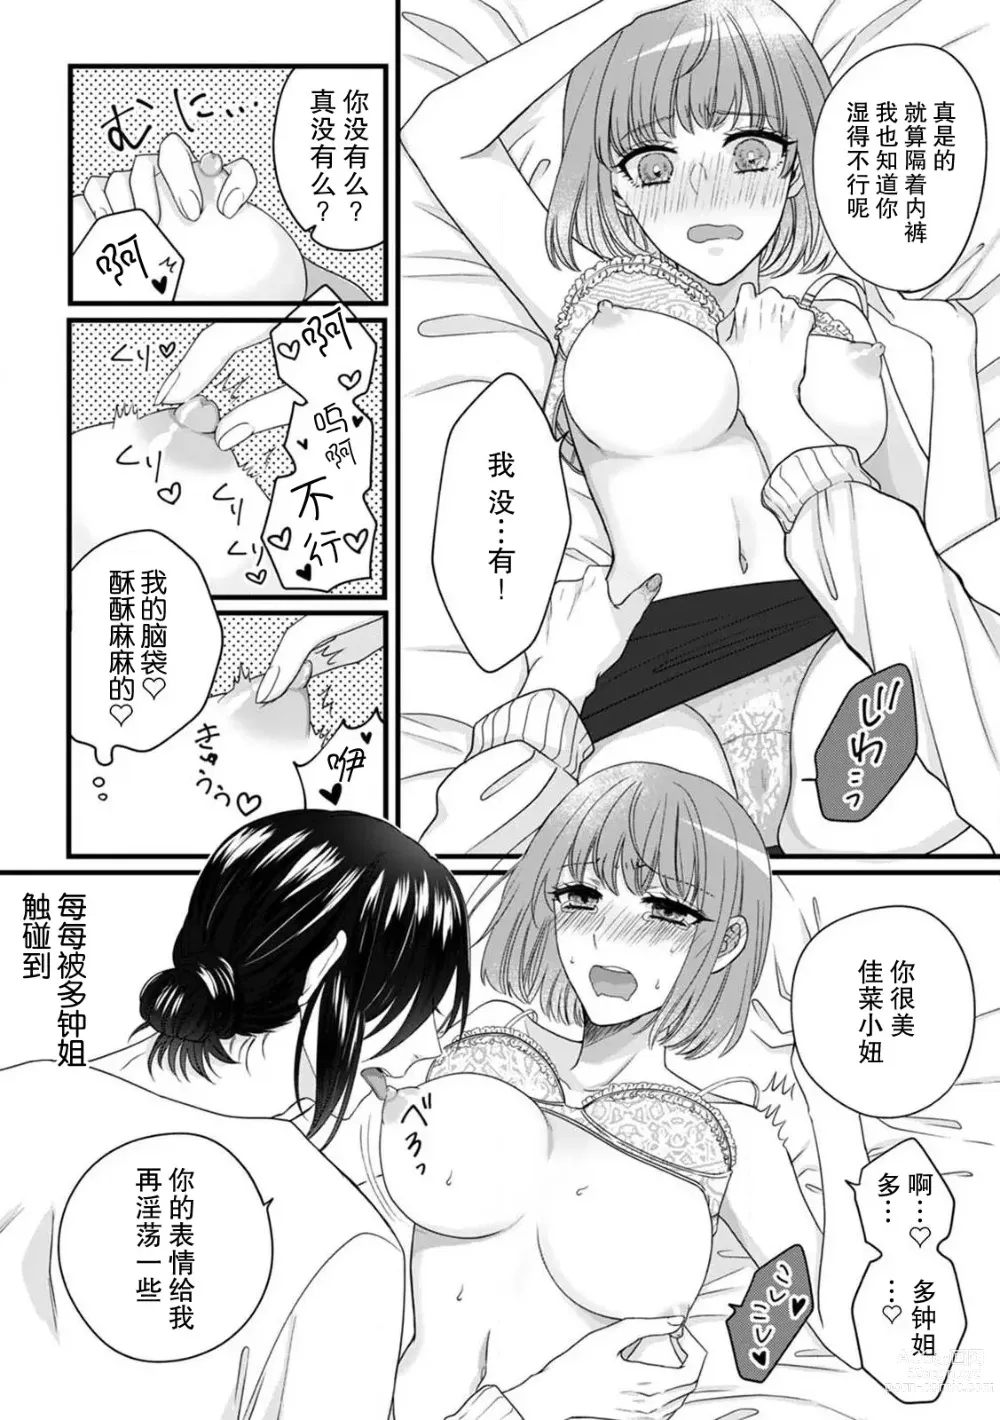 Page 14 of manga 弄湿我的是青梅竹马的男大姐 第一次见到……他认真的雄性一面。 1-5 end